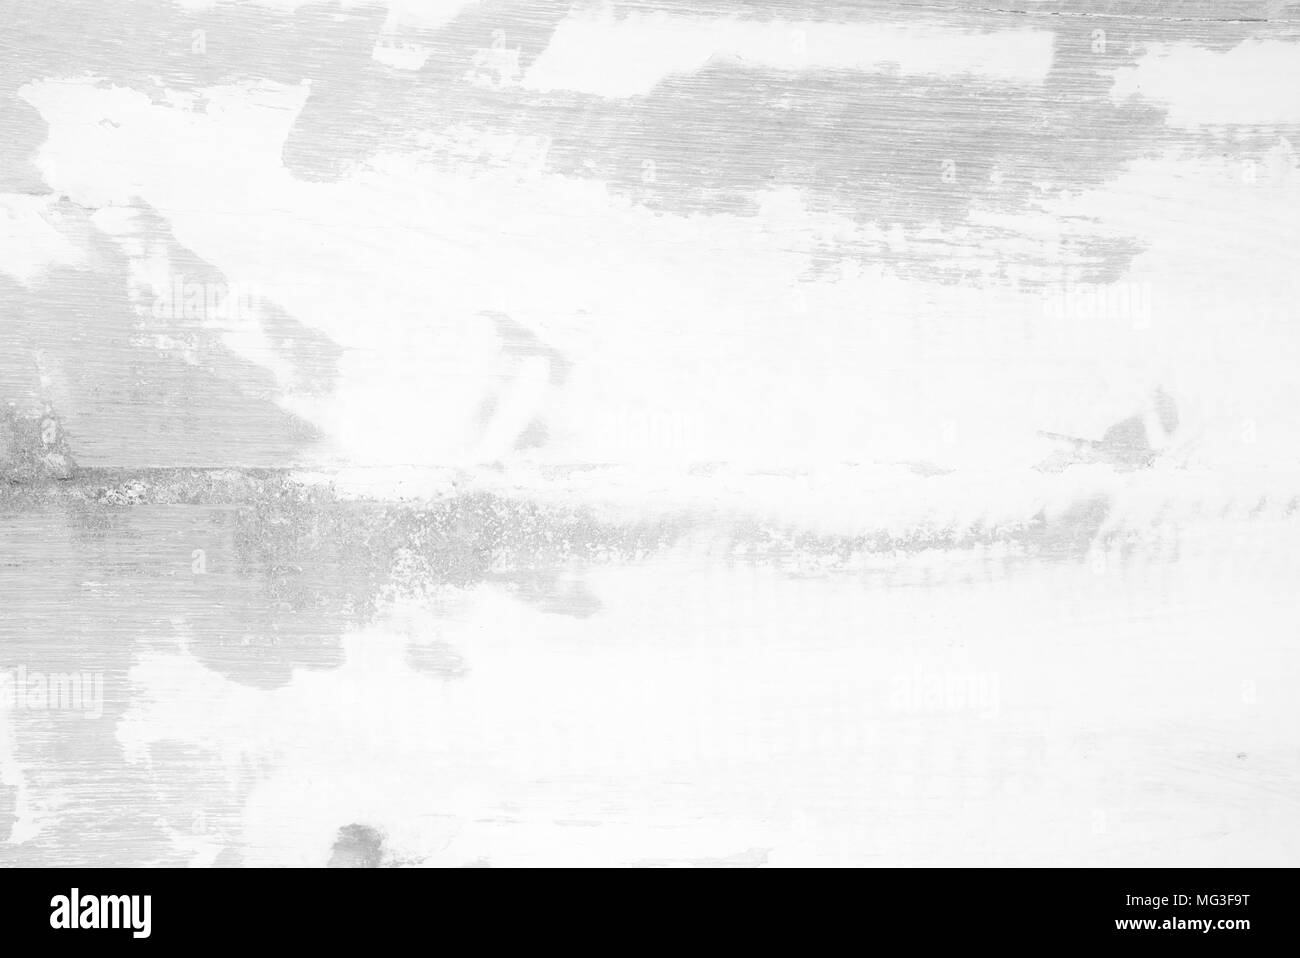 White Grunge Wood Texture Background. Stock Photo